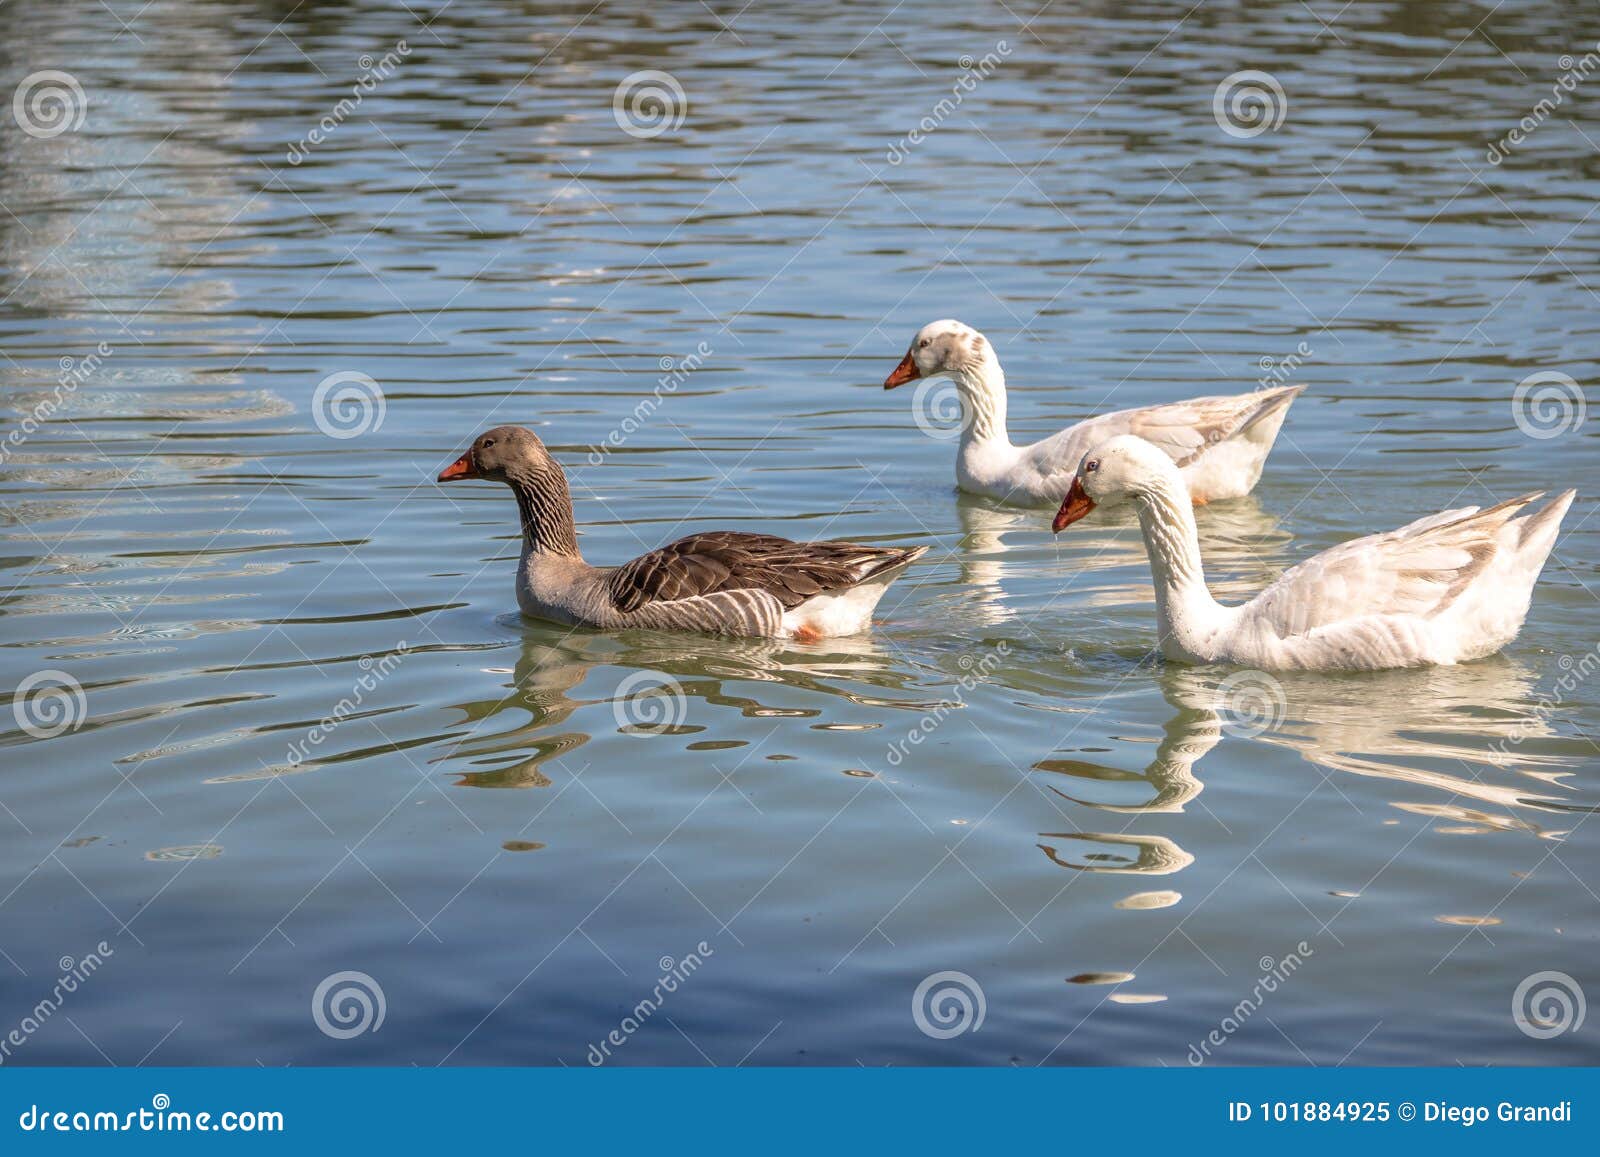 geese swimming in a lake at barigui park - curitiba, parana, brazil